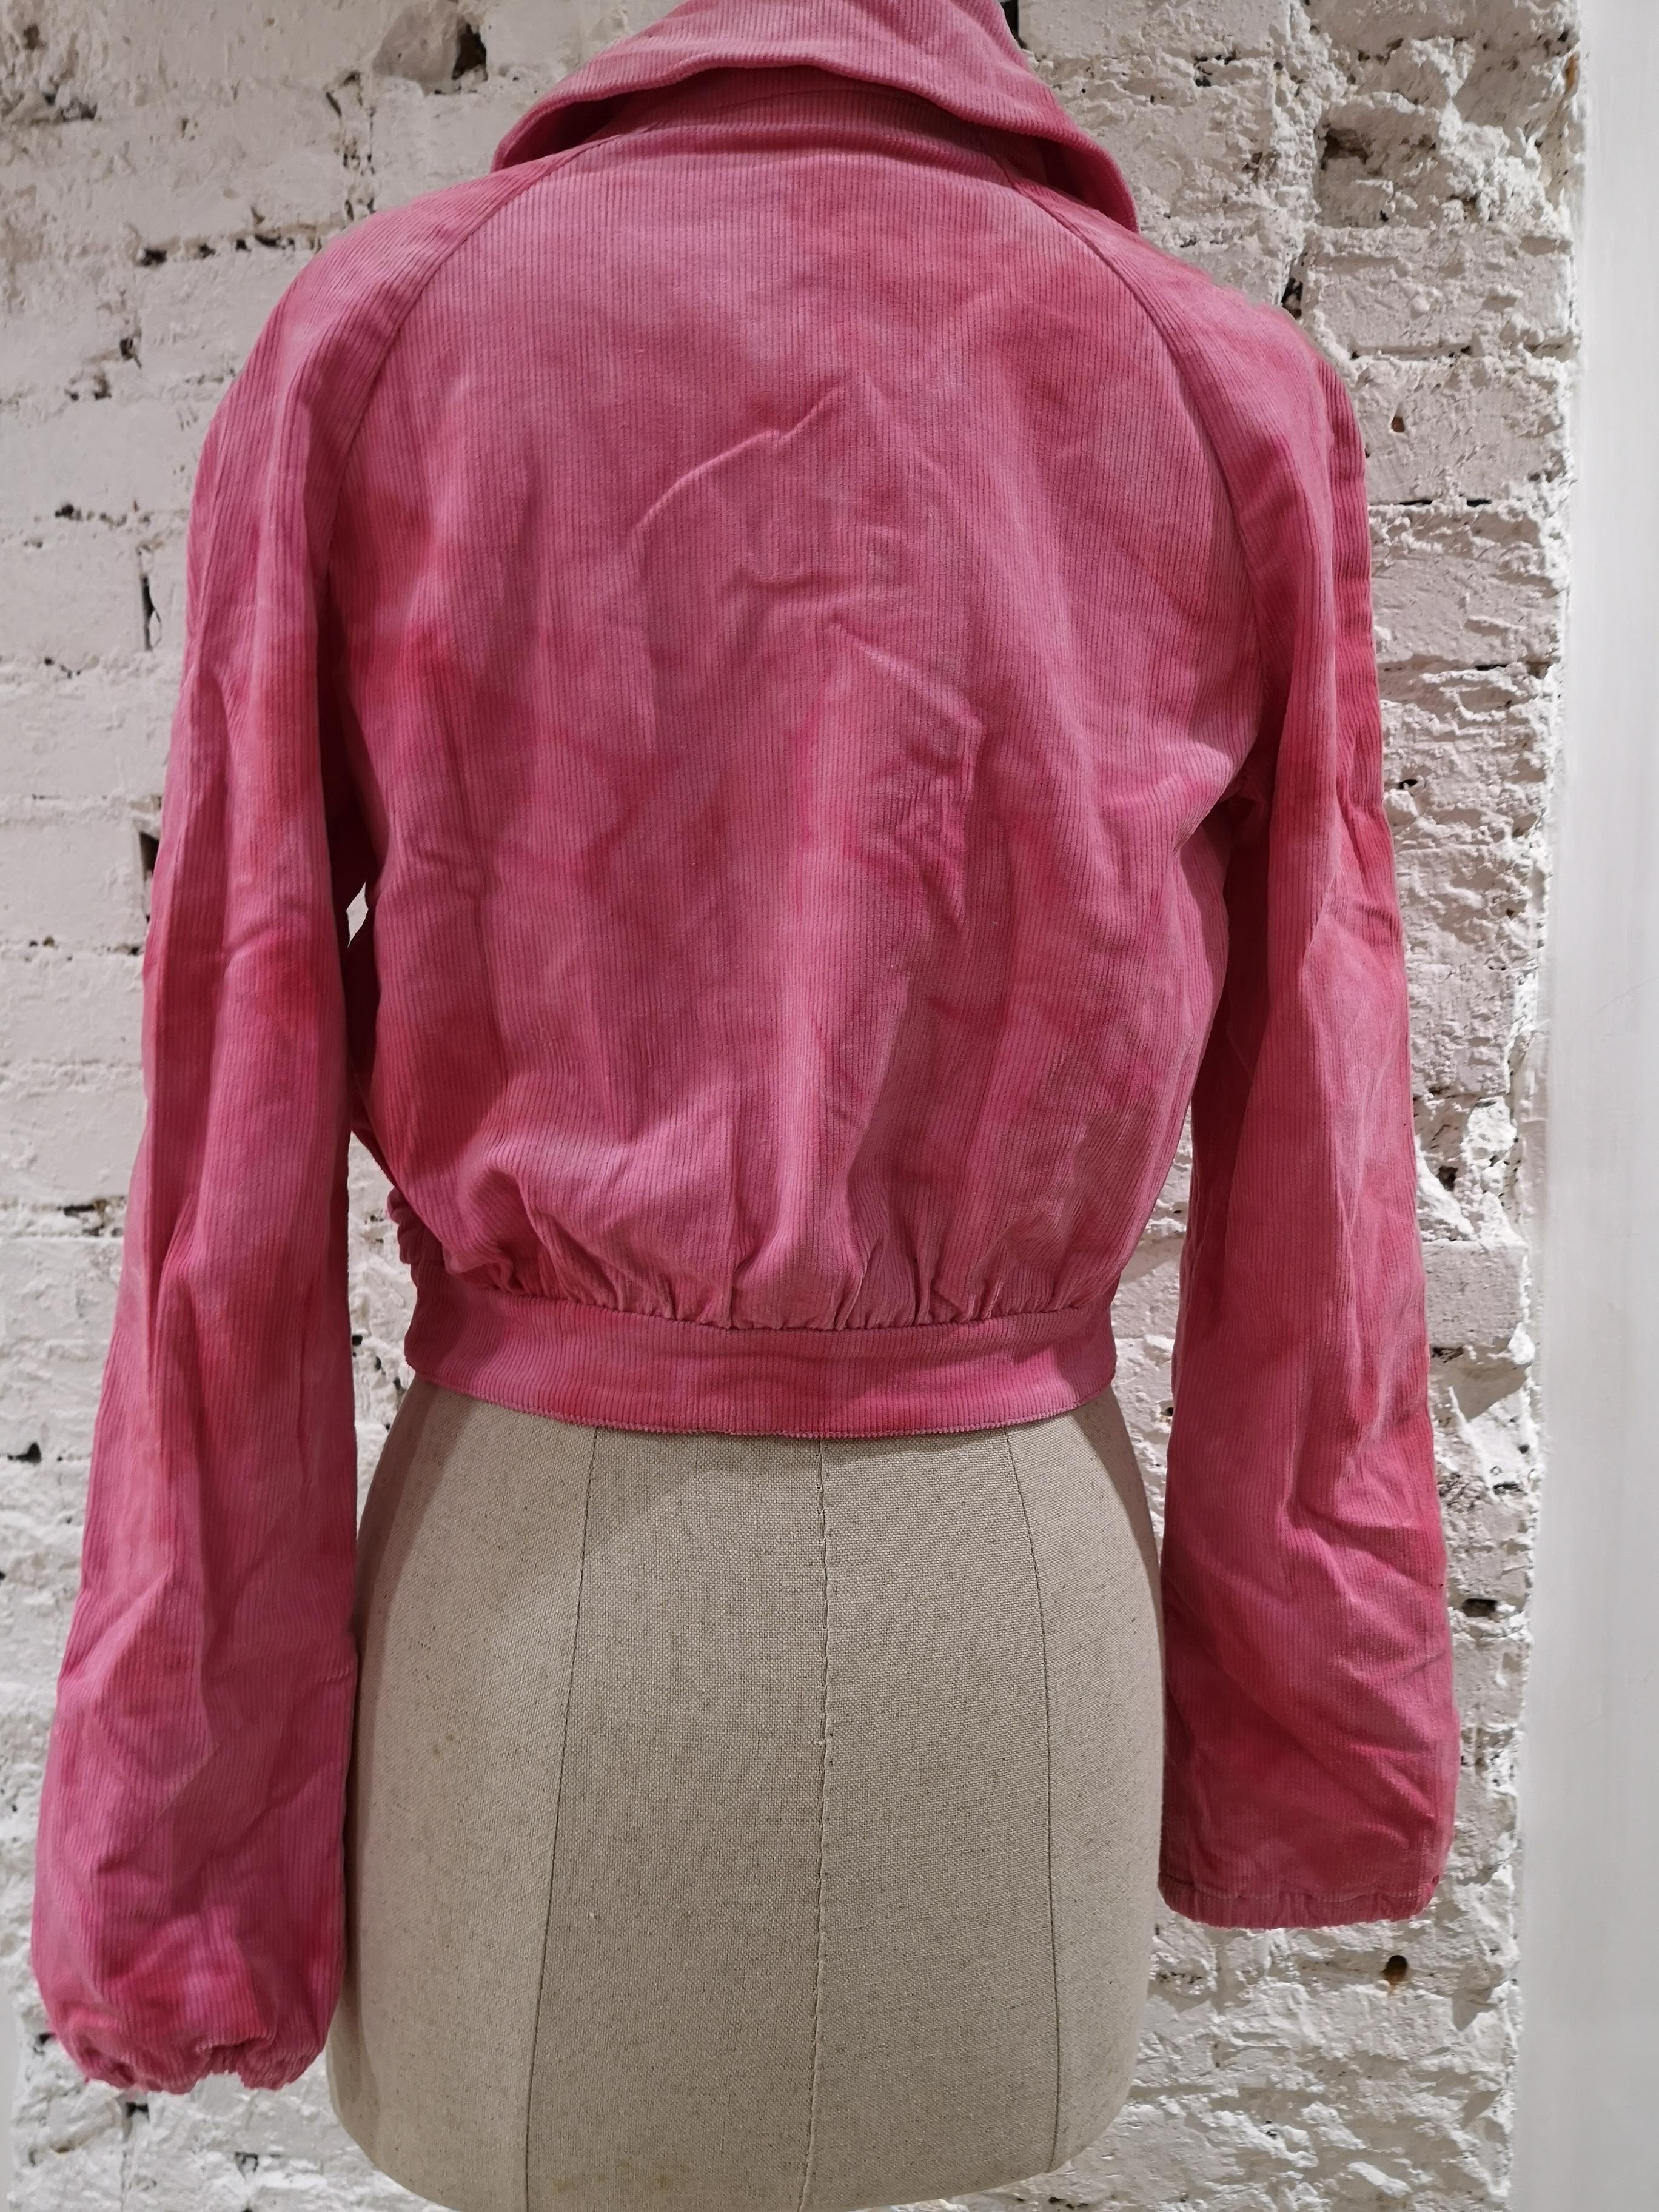 Women's Christian Lacroix pink fluo jacket